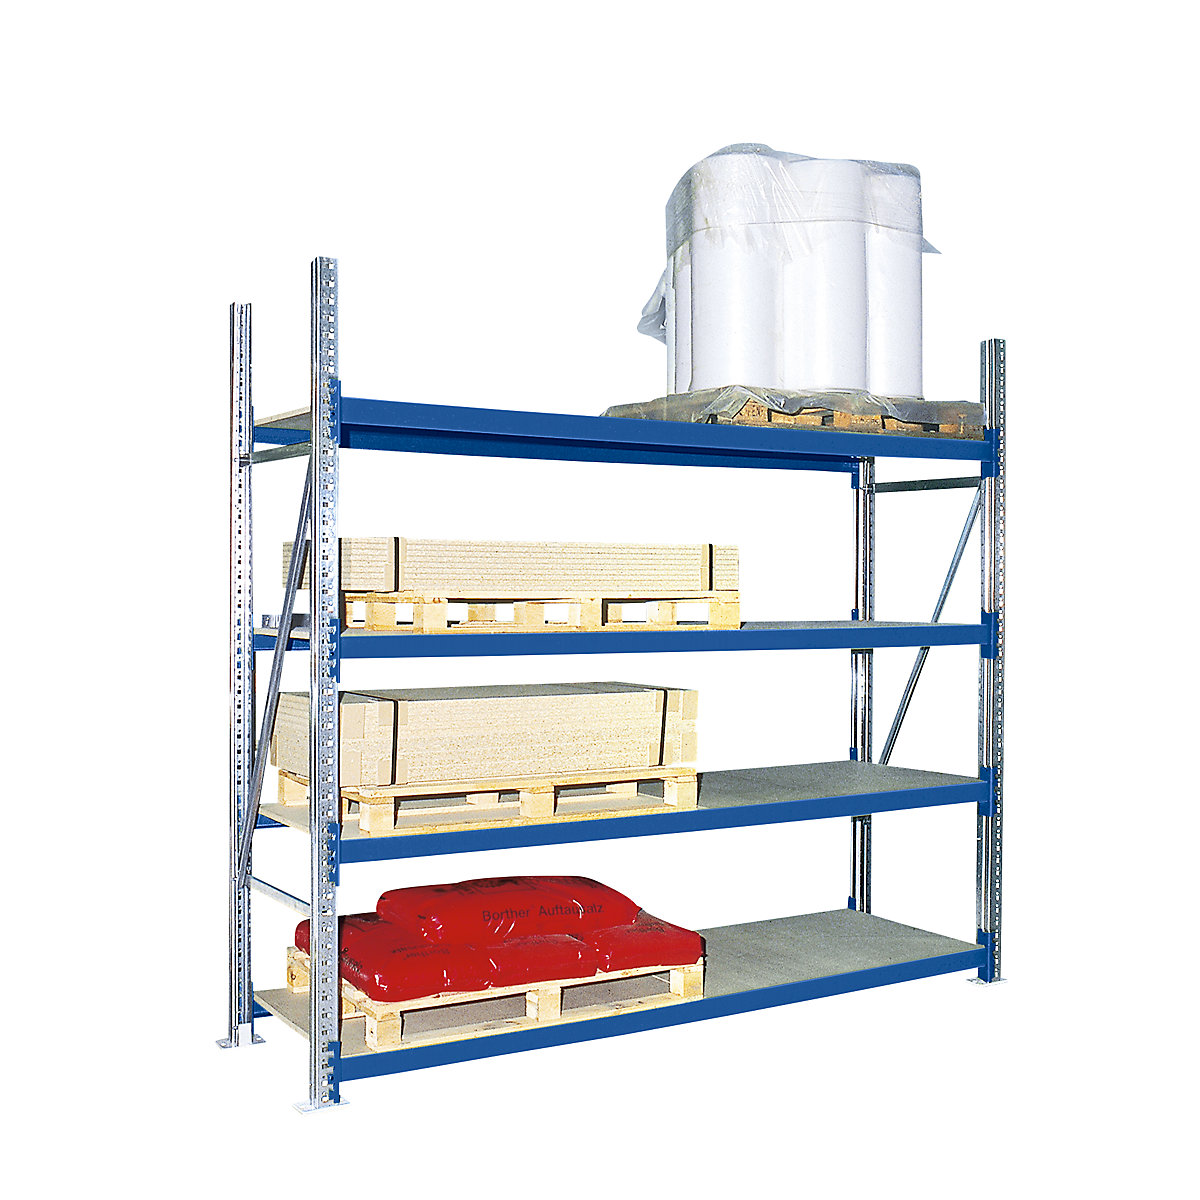 Wide span shelving unit with moulded chipboard shelves – eurokraft pro, depth 1100 mm, cross beam length 1350 mm, height 2500 mm, standard shelf unit, blue RAL 5010